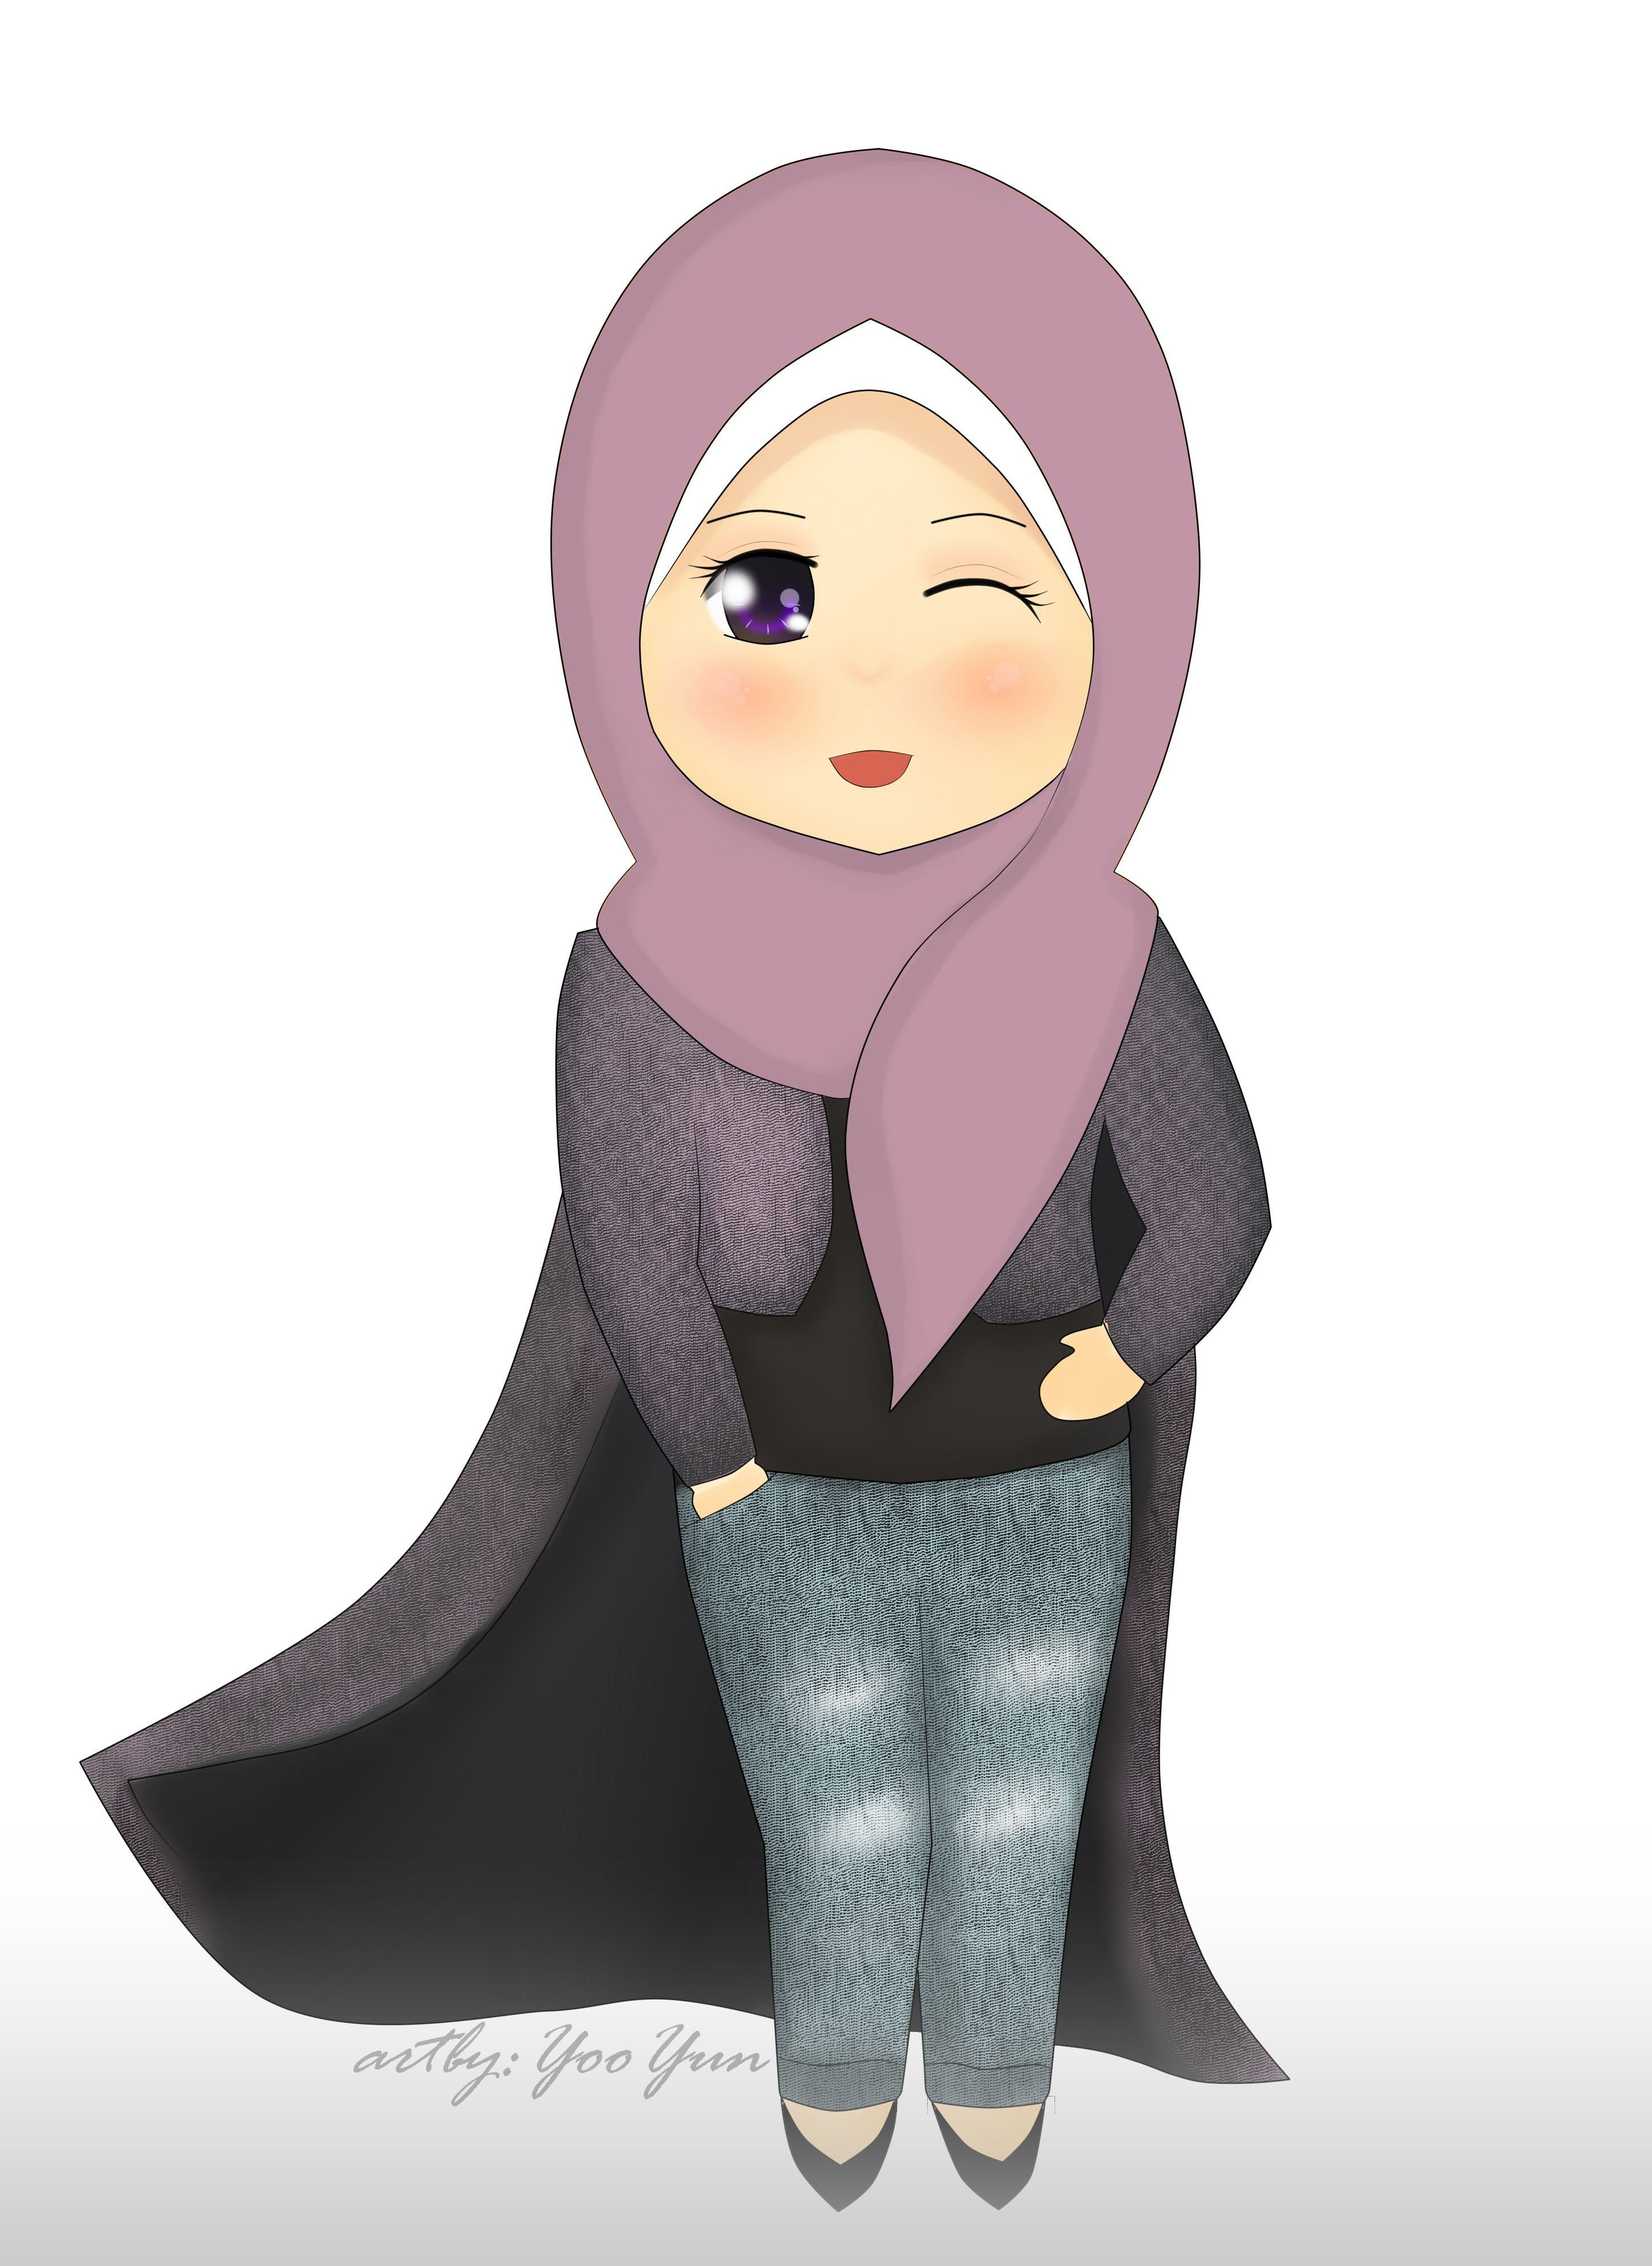  Gambar  Kartun  Muslimah Kuliah  Design Kartun  